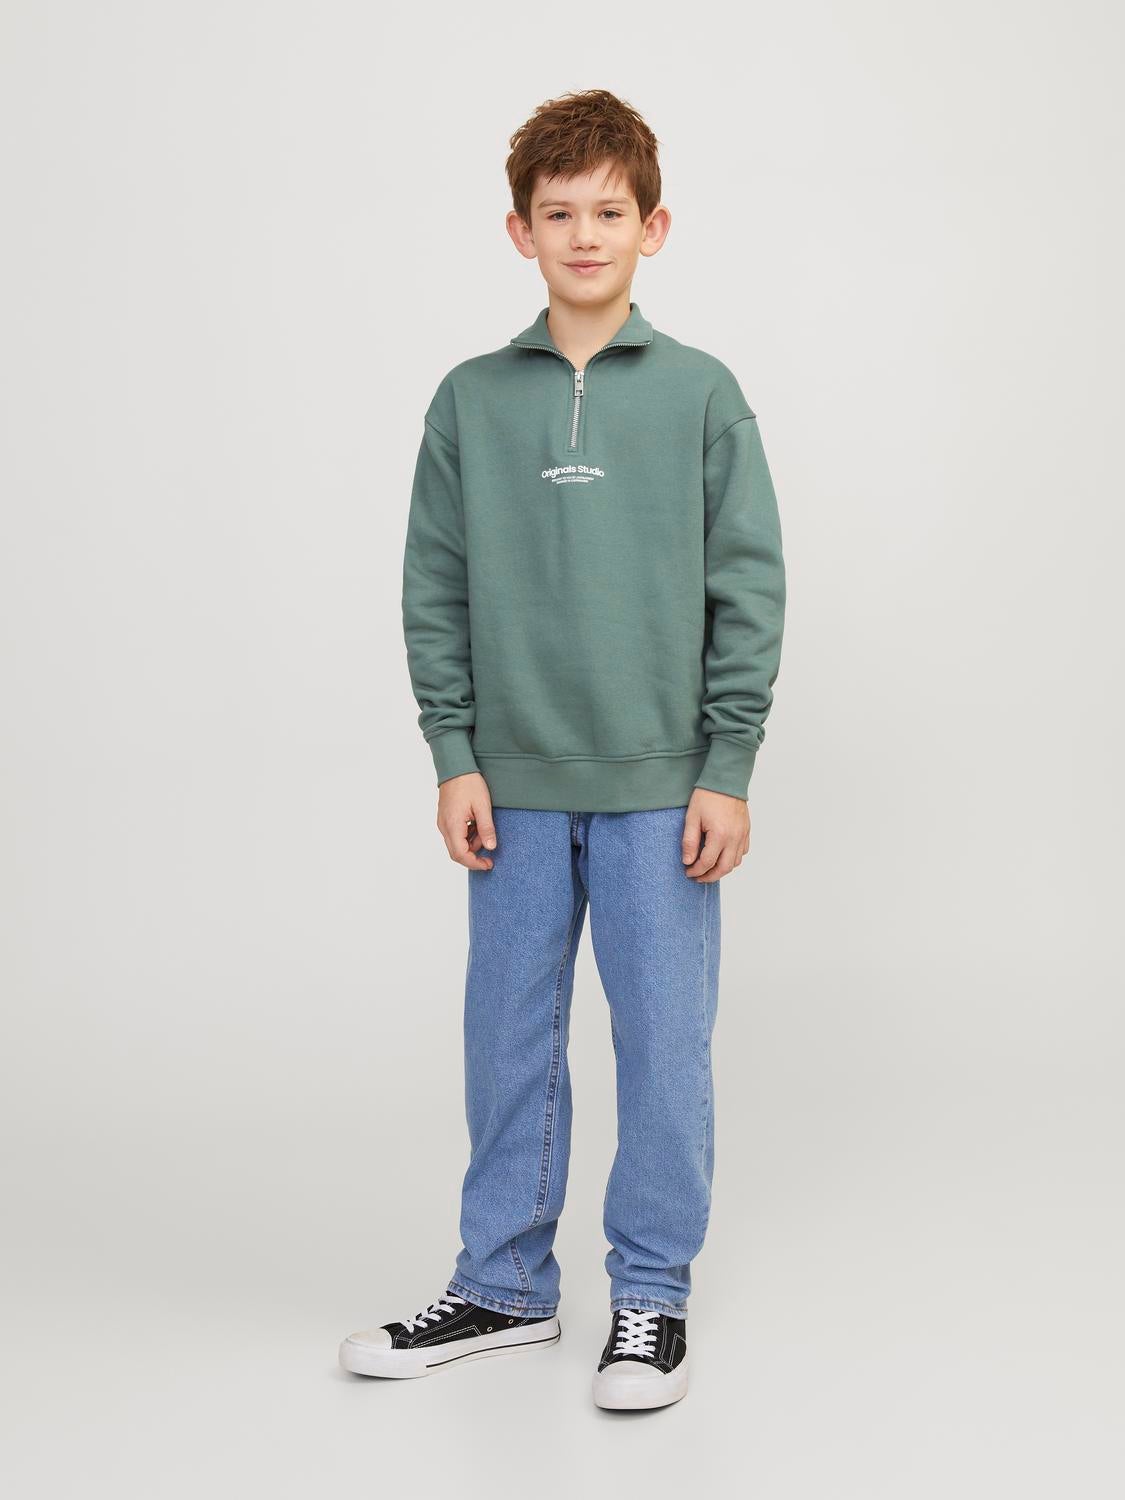 Printed Zip Sweatshirt For boys